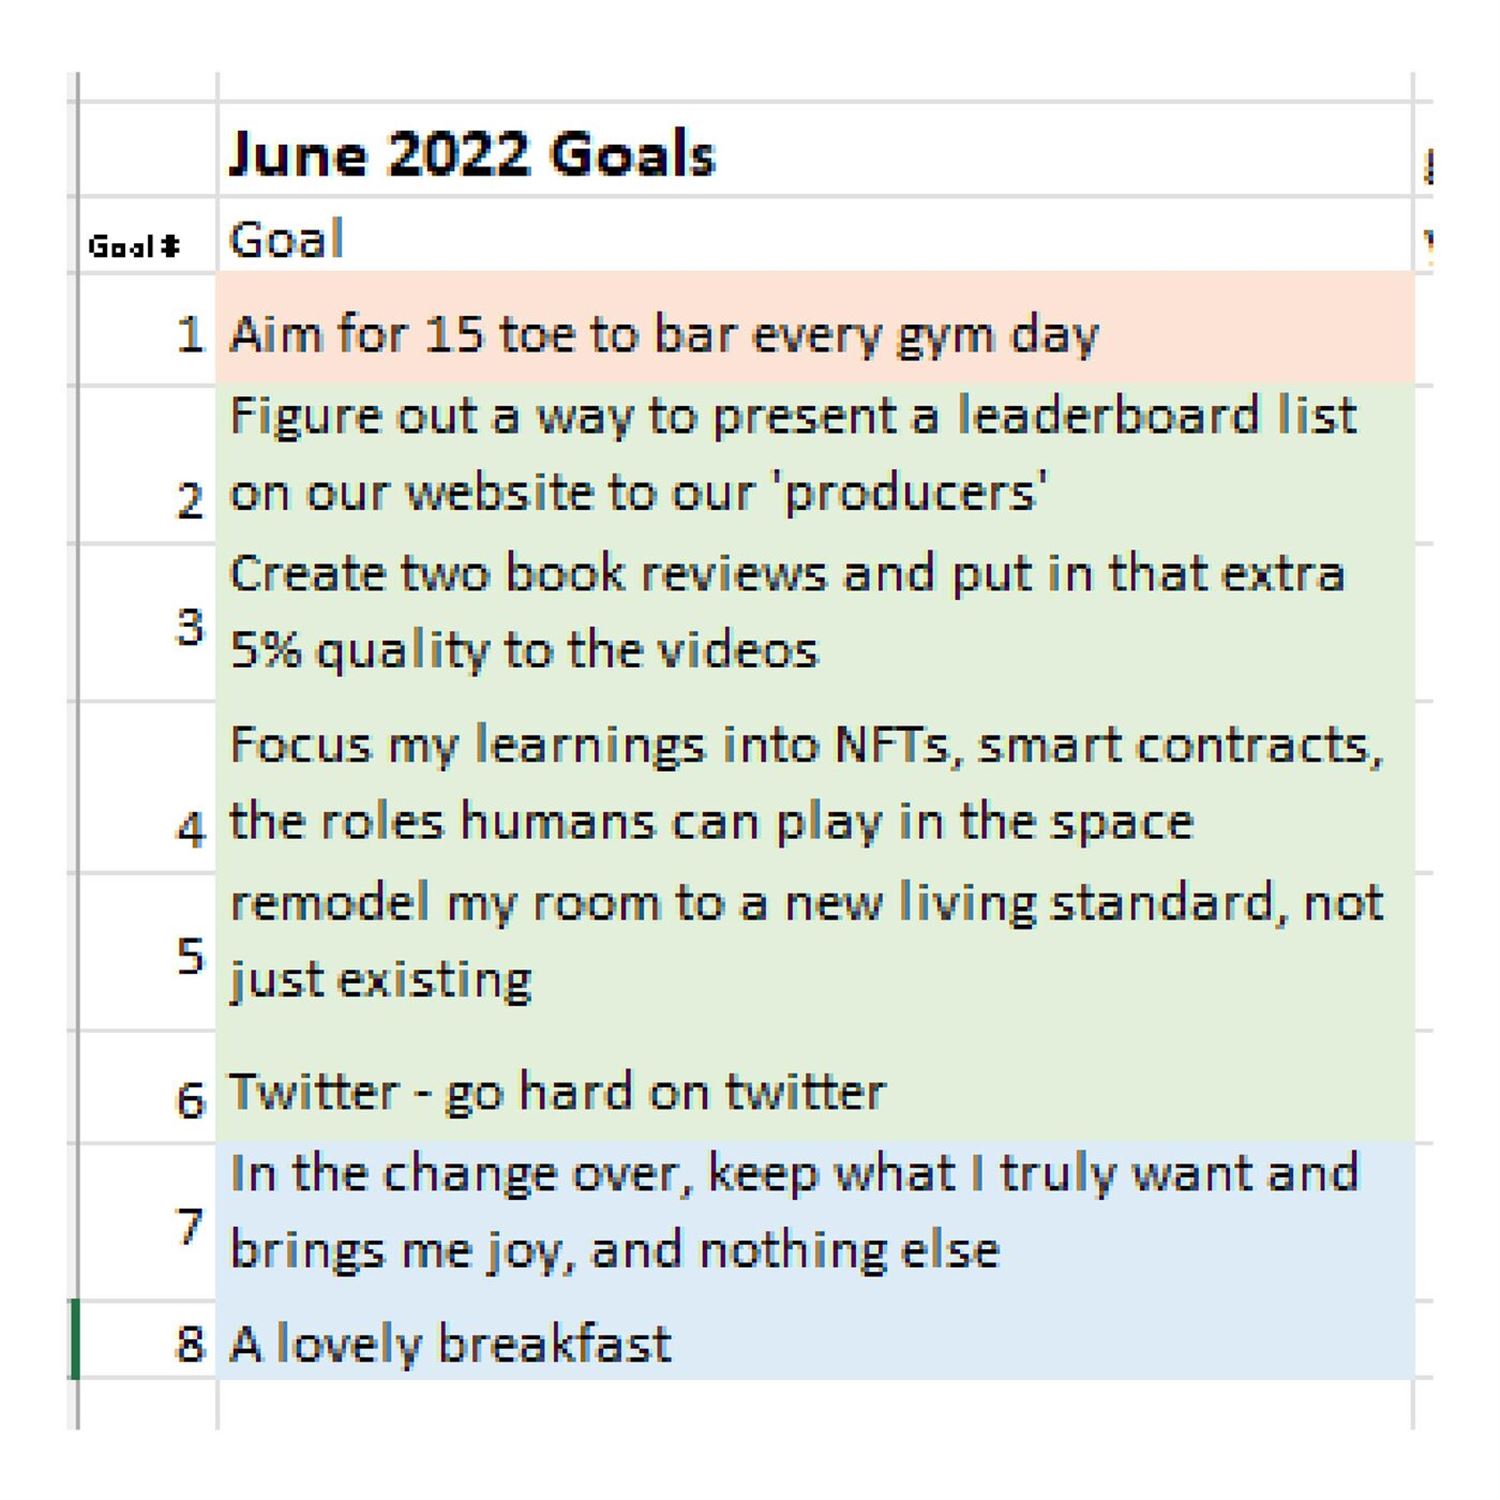 Juan's June Goals